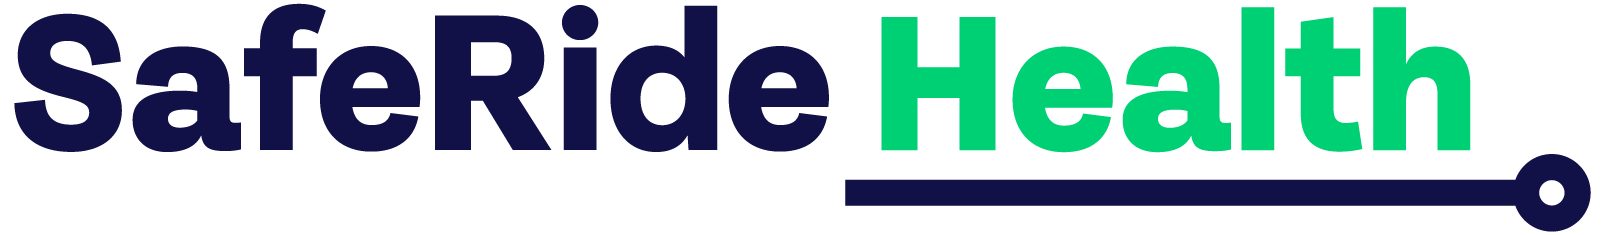 img-chp-Saferide_logo